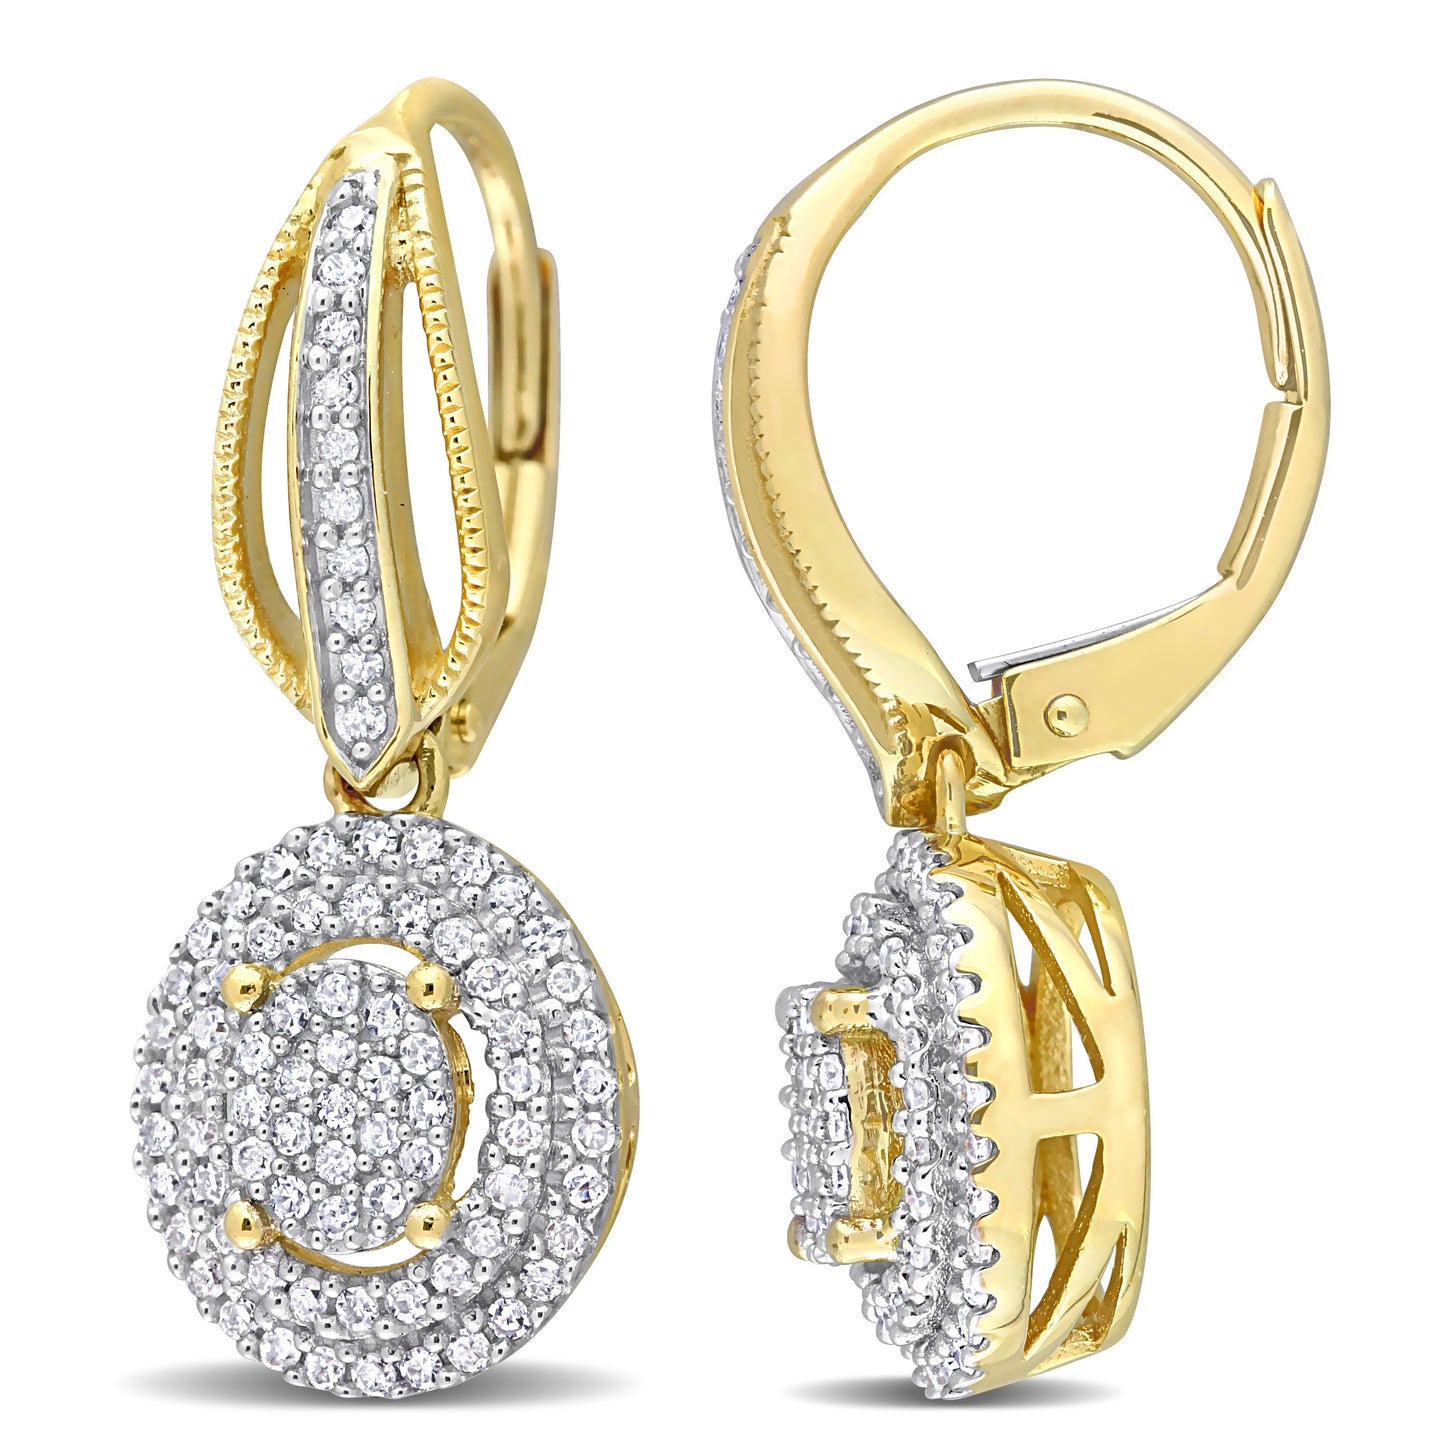 Double Halo Oval Cluster Diamond Earrings in 10k Yellow Gold